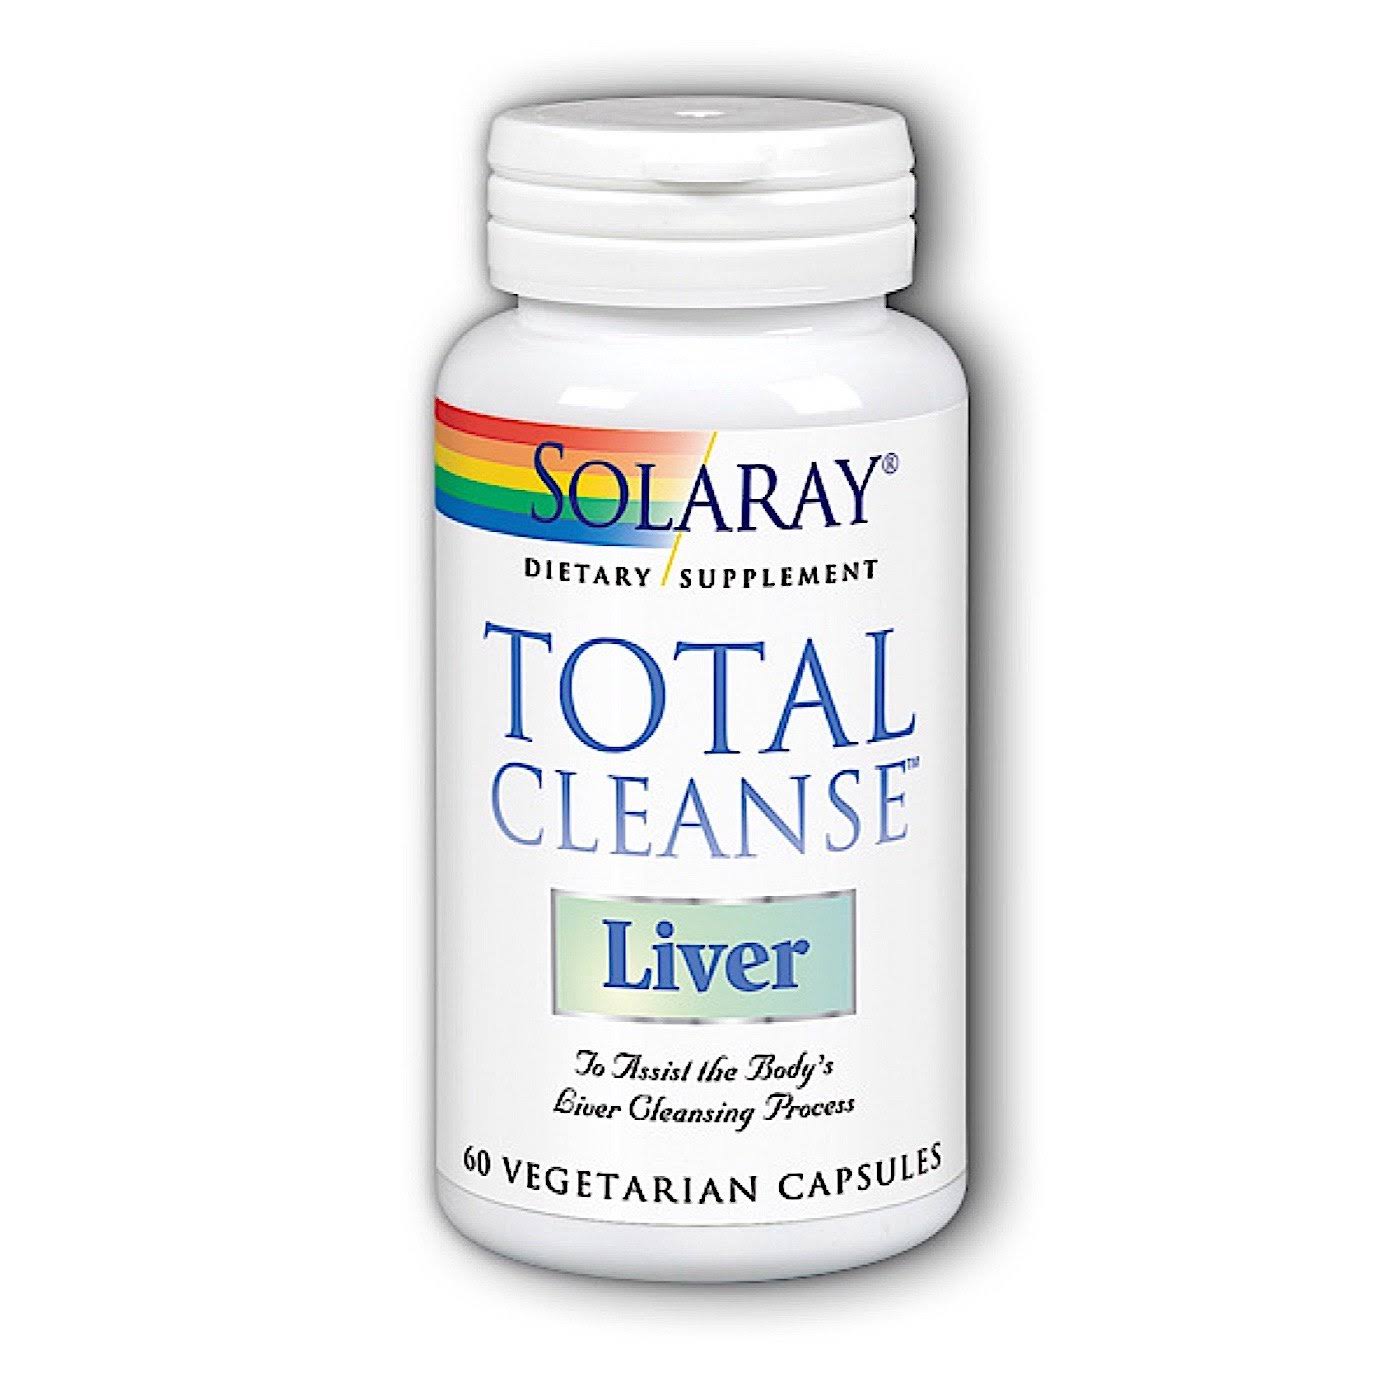 Solaray Total Cleanse Liver - 60 Vegetarian Capsules